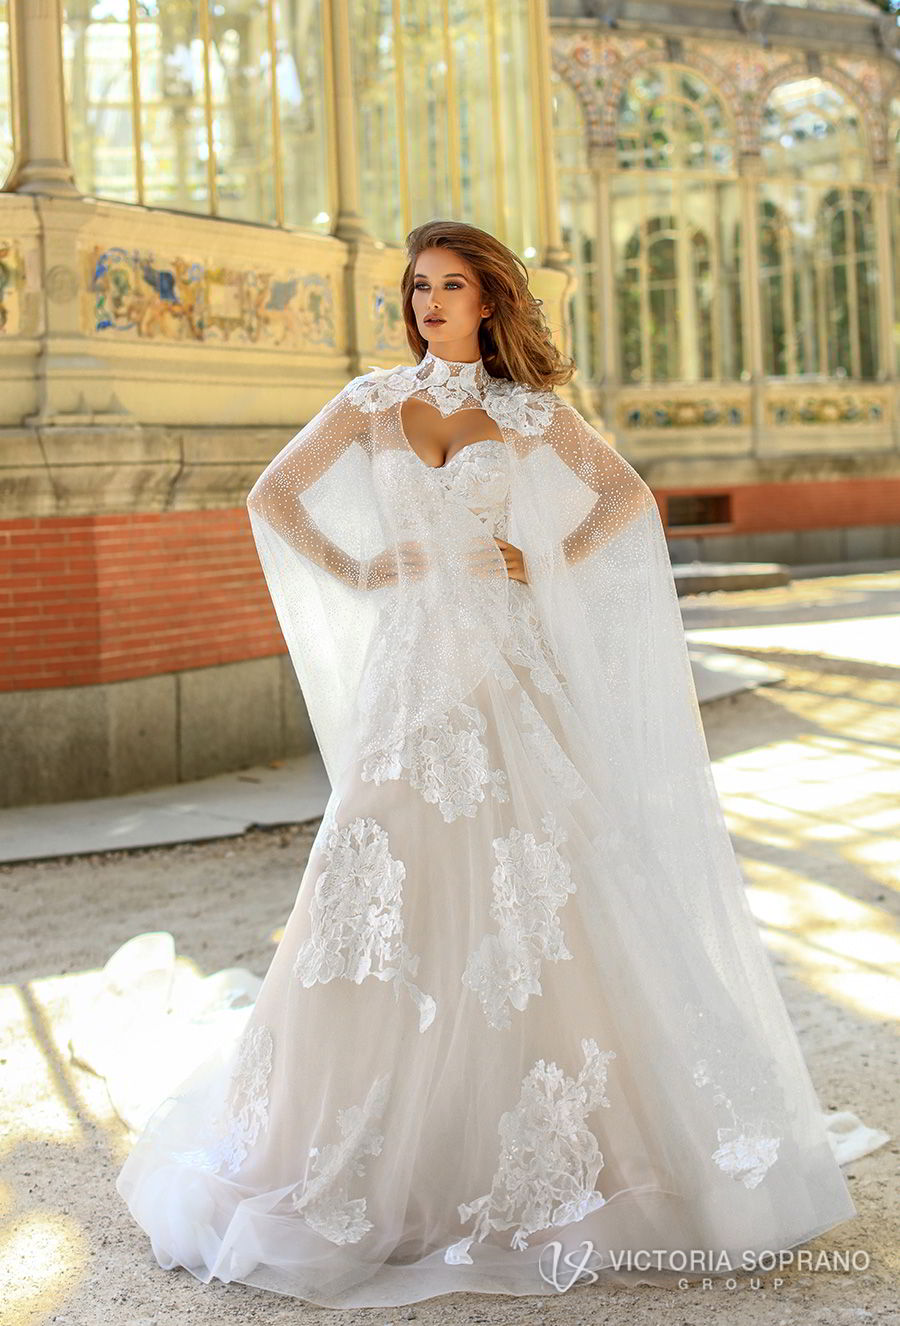 Victoria Soprano 2018 Wedding Dresses — “The One” Bridal Collection ...